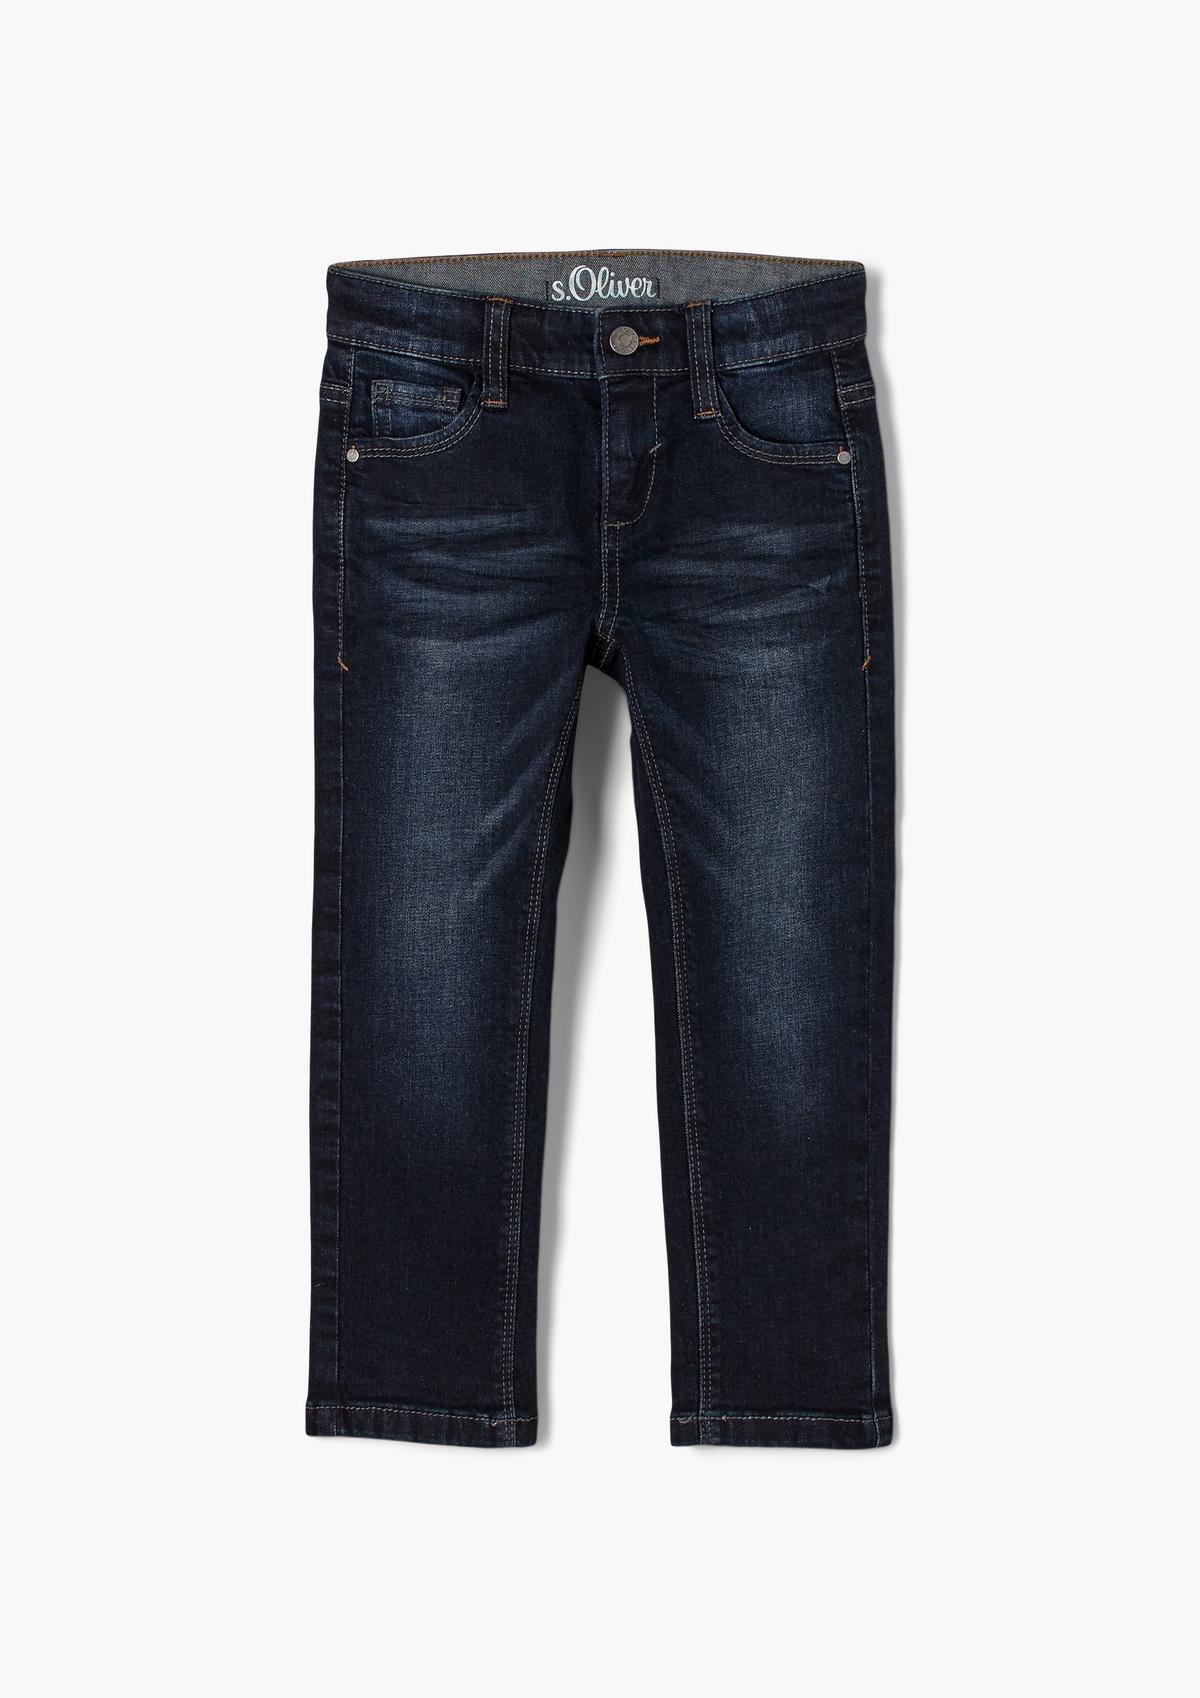 s.Oliver Jeans Pelle / regular fit / mid rise / straight leg / garment wash